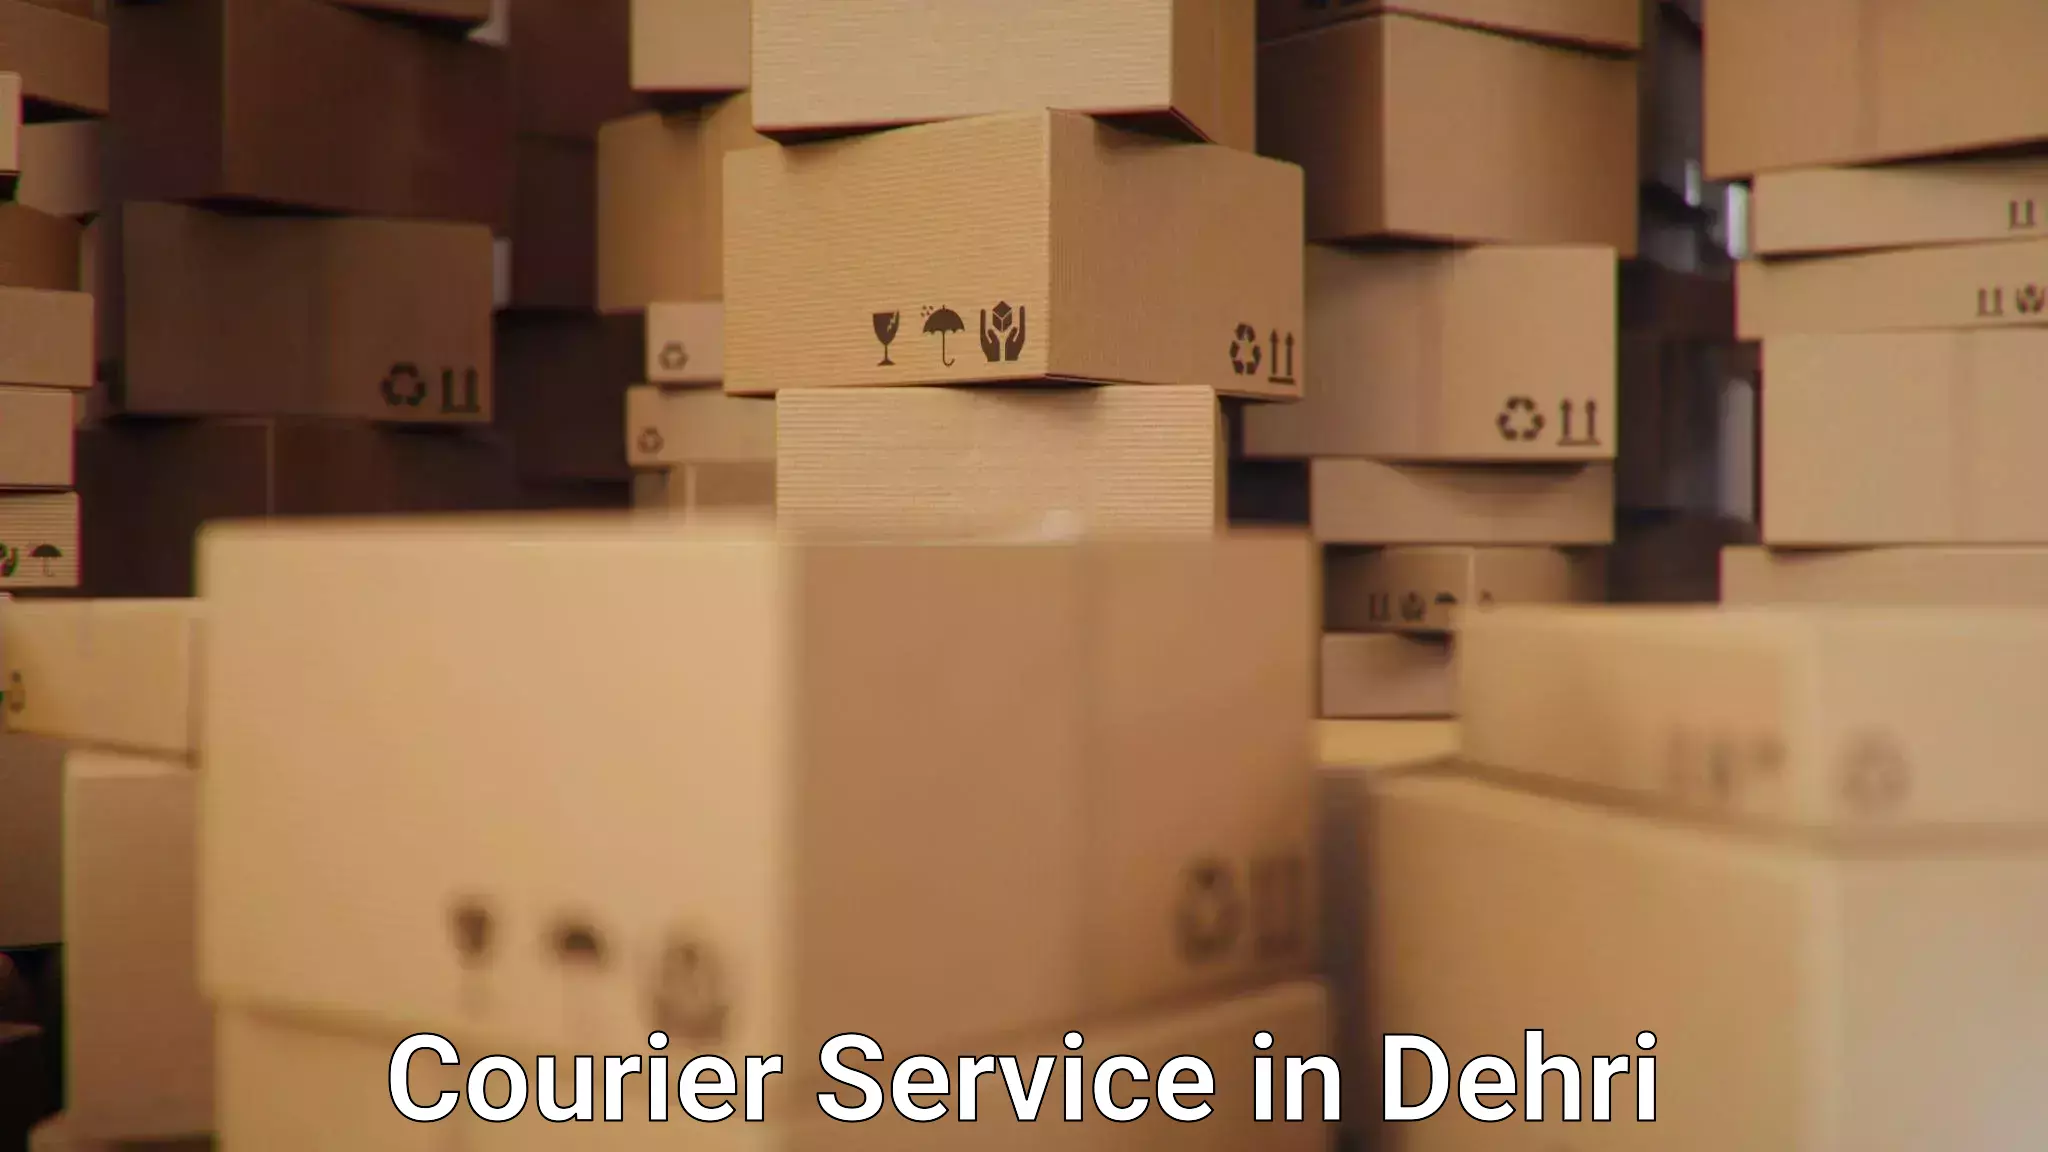 Express courier capabilities in Dehri